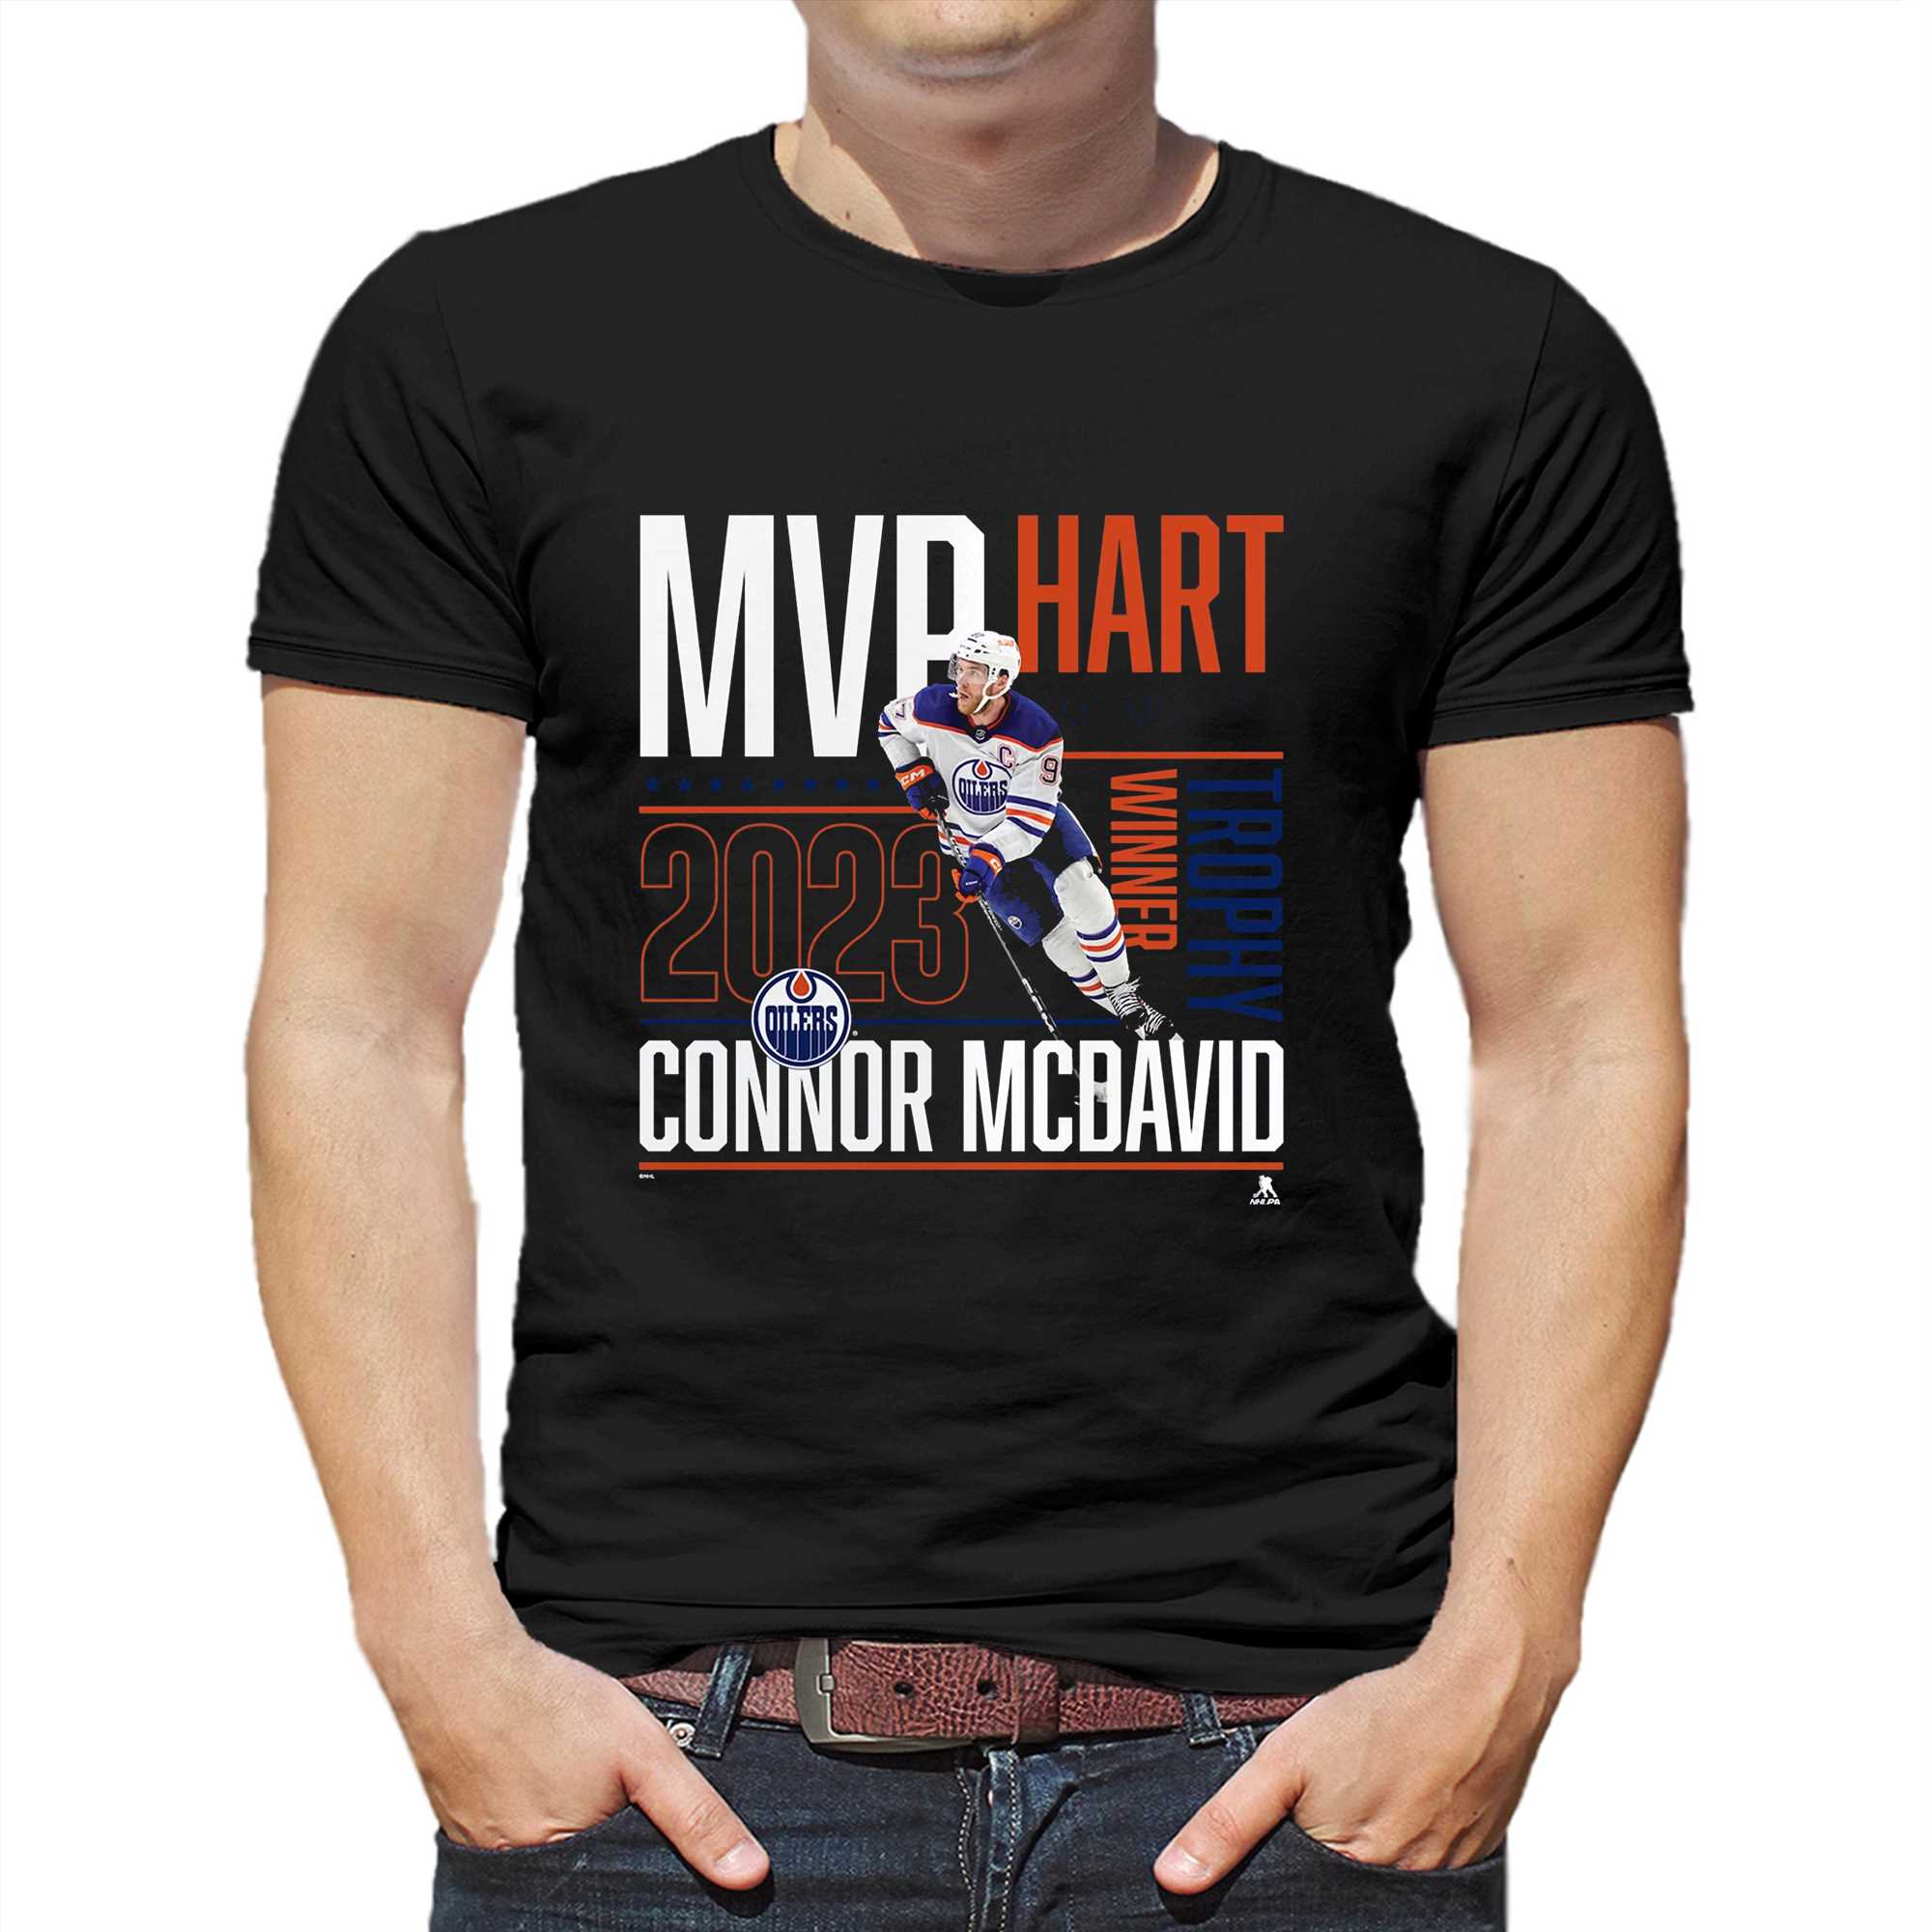  Connor McDavid Youth Shirt (Kids Shirt, 6-7Y Small